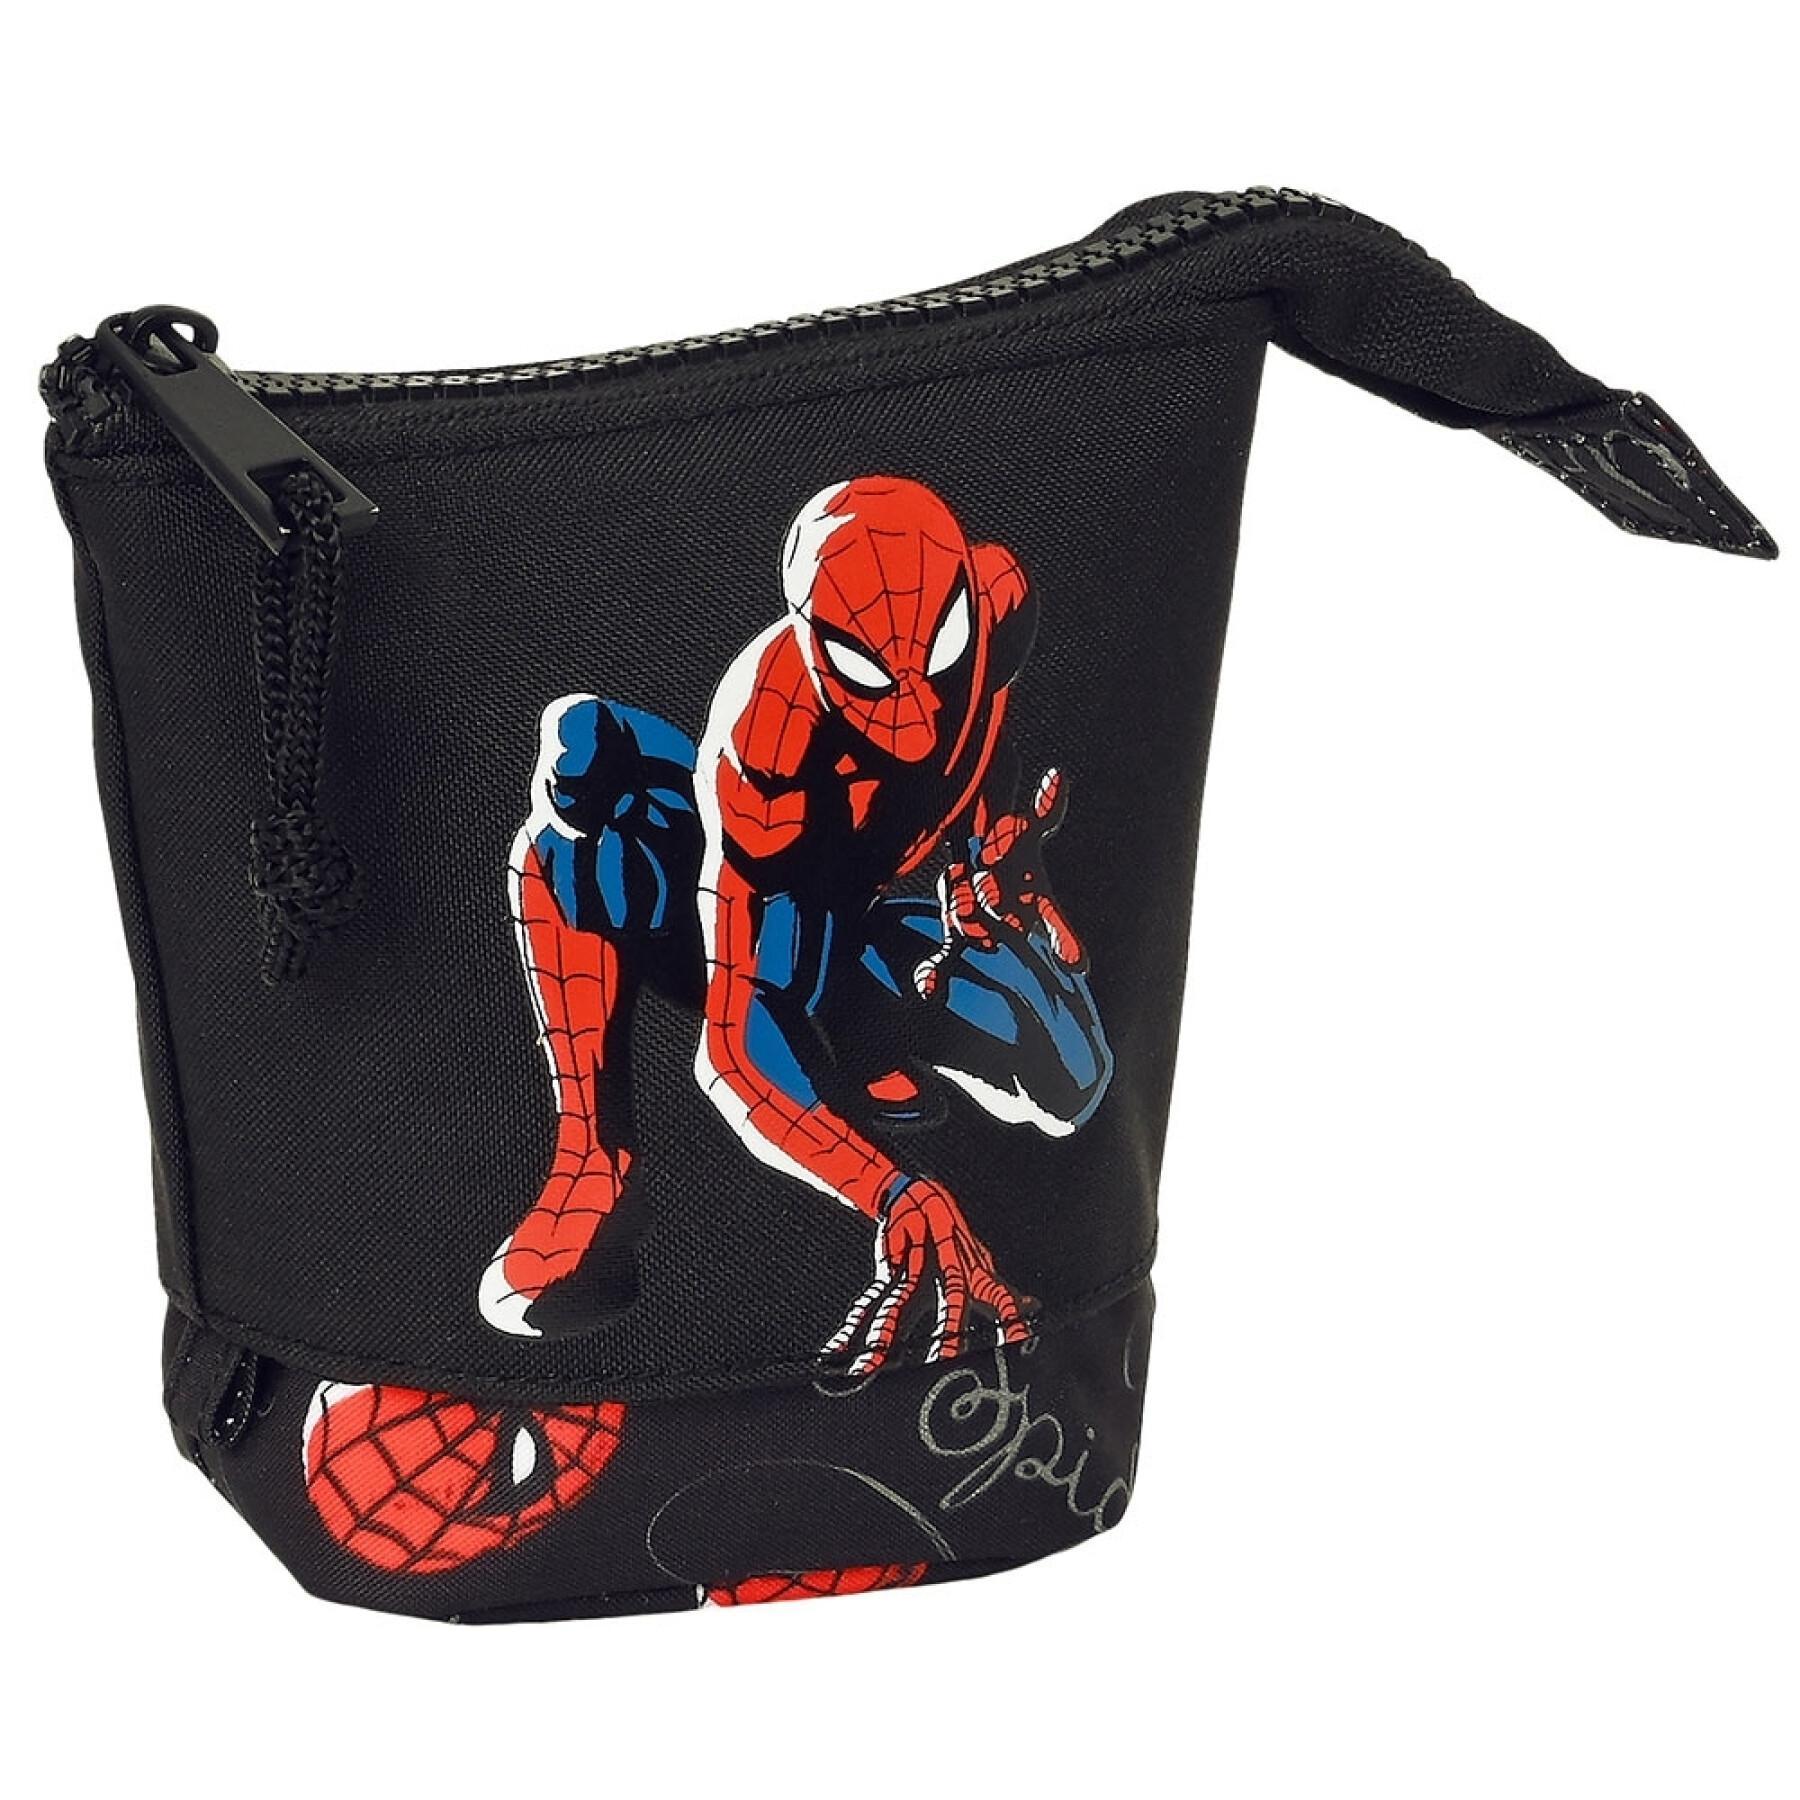 Children's goblet school kit Alpino Spiderman